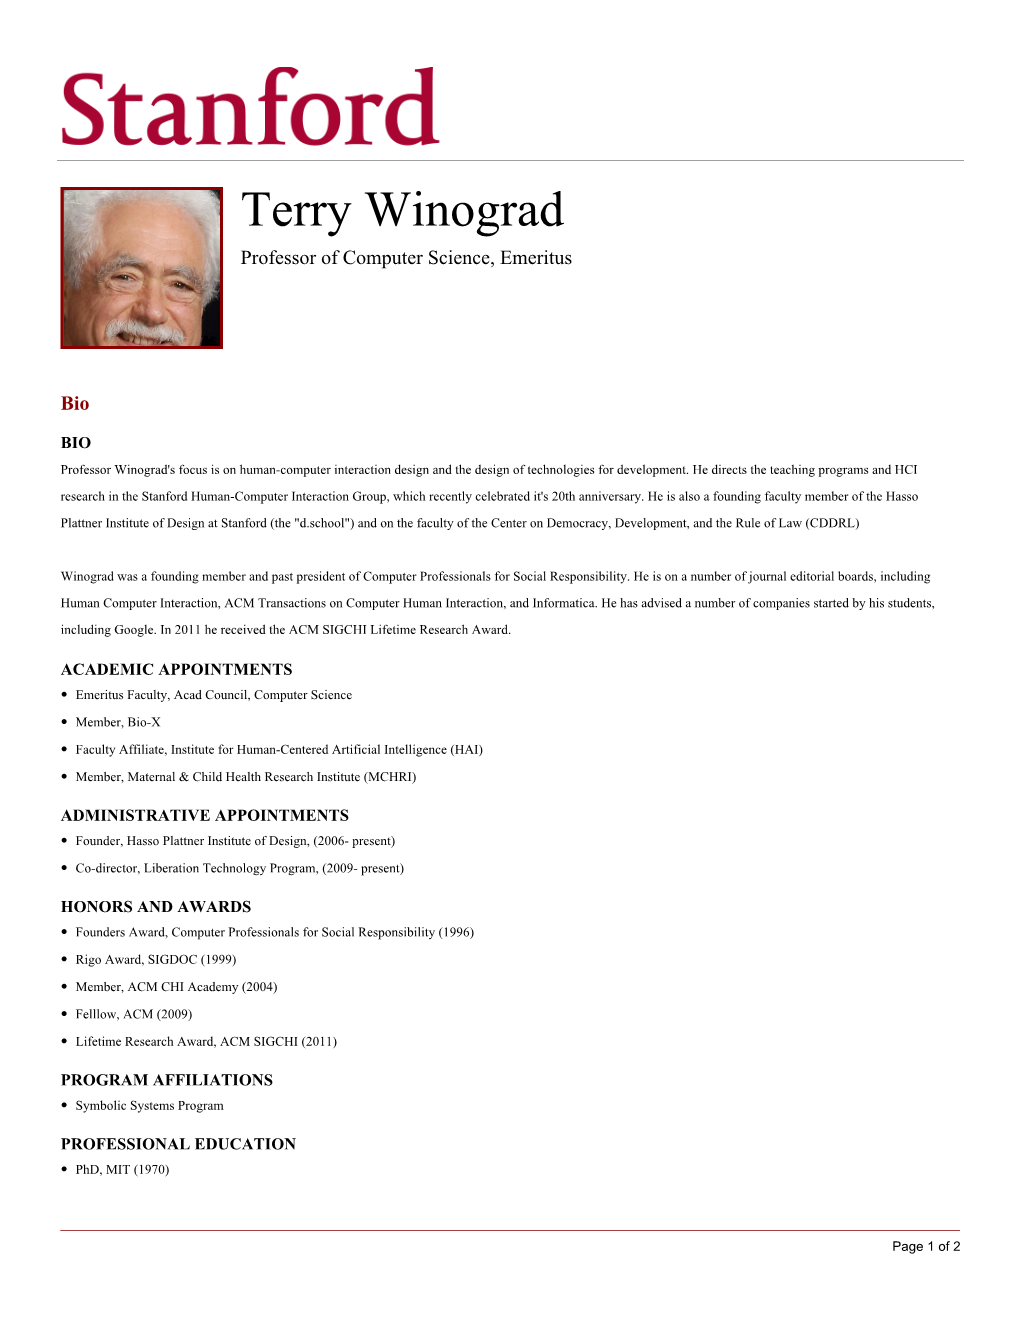 Terry Winograd Professor of Computer Science, Emeritus